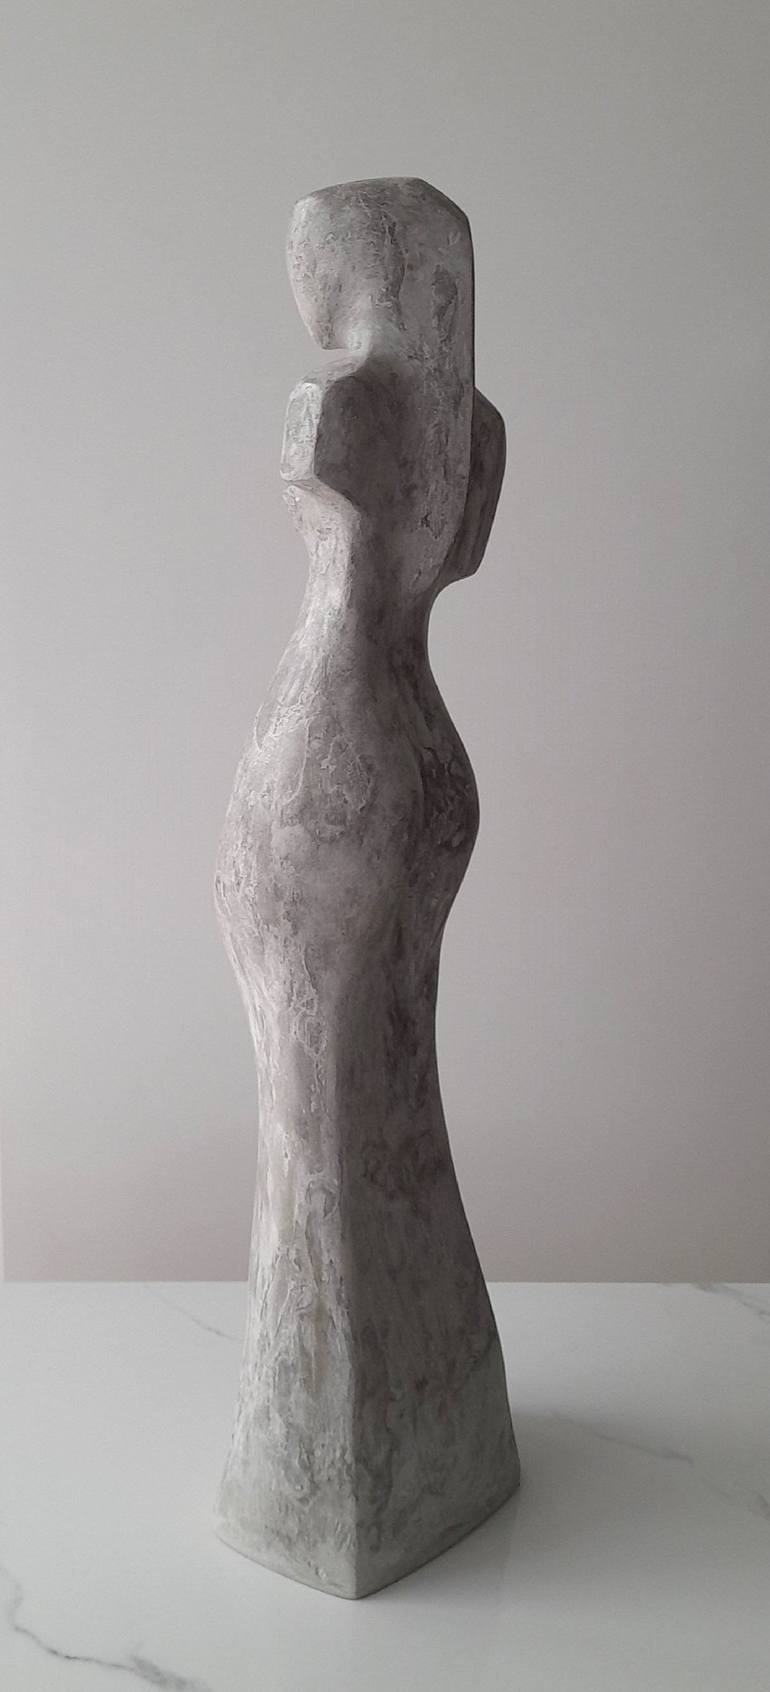 Original Body Sculpture by Clark Camilleri